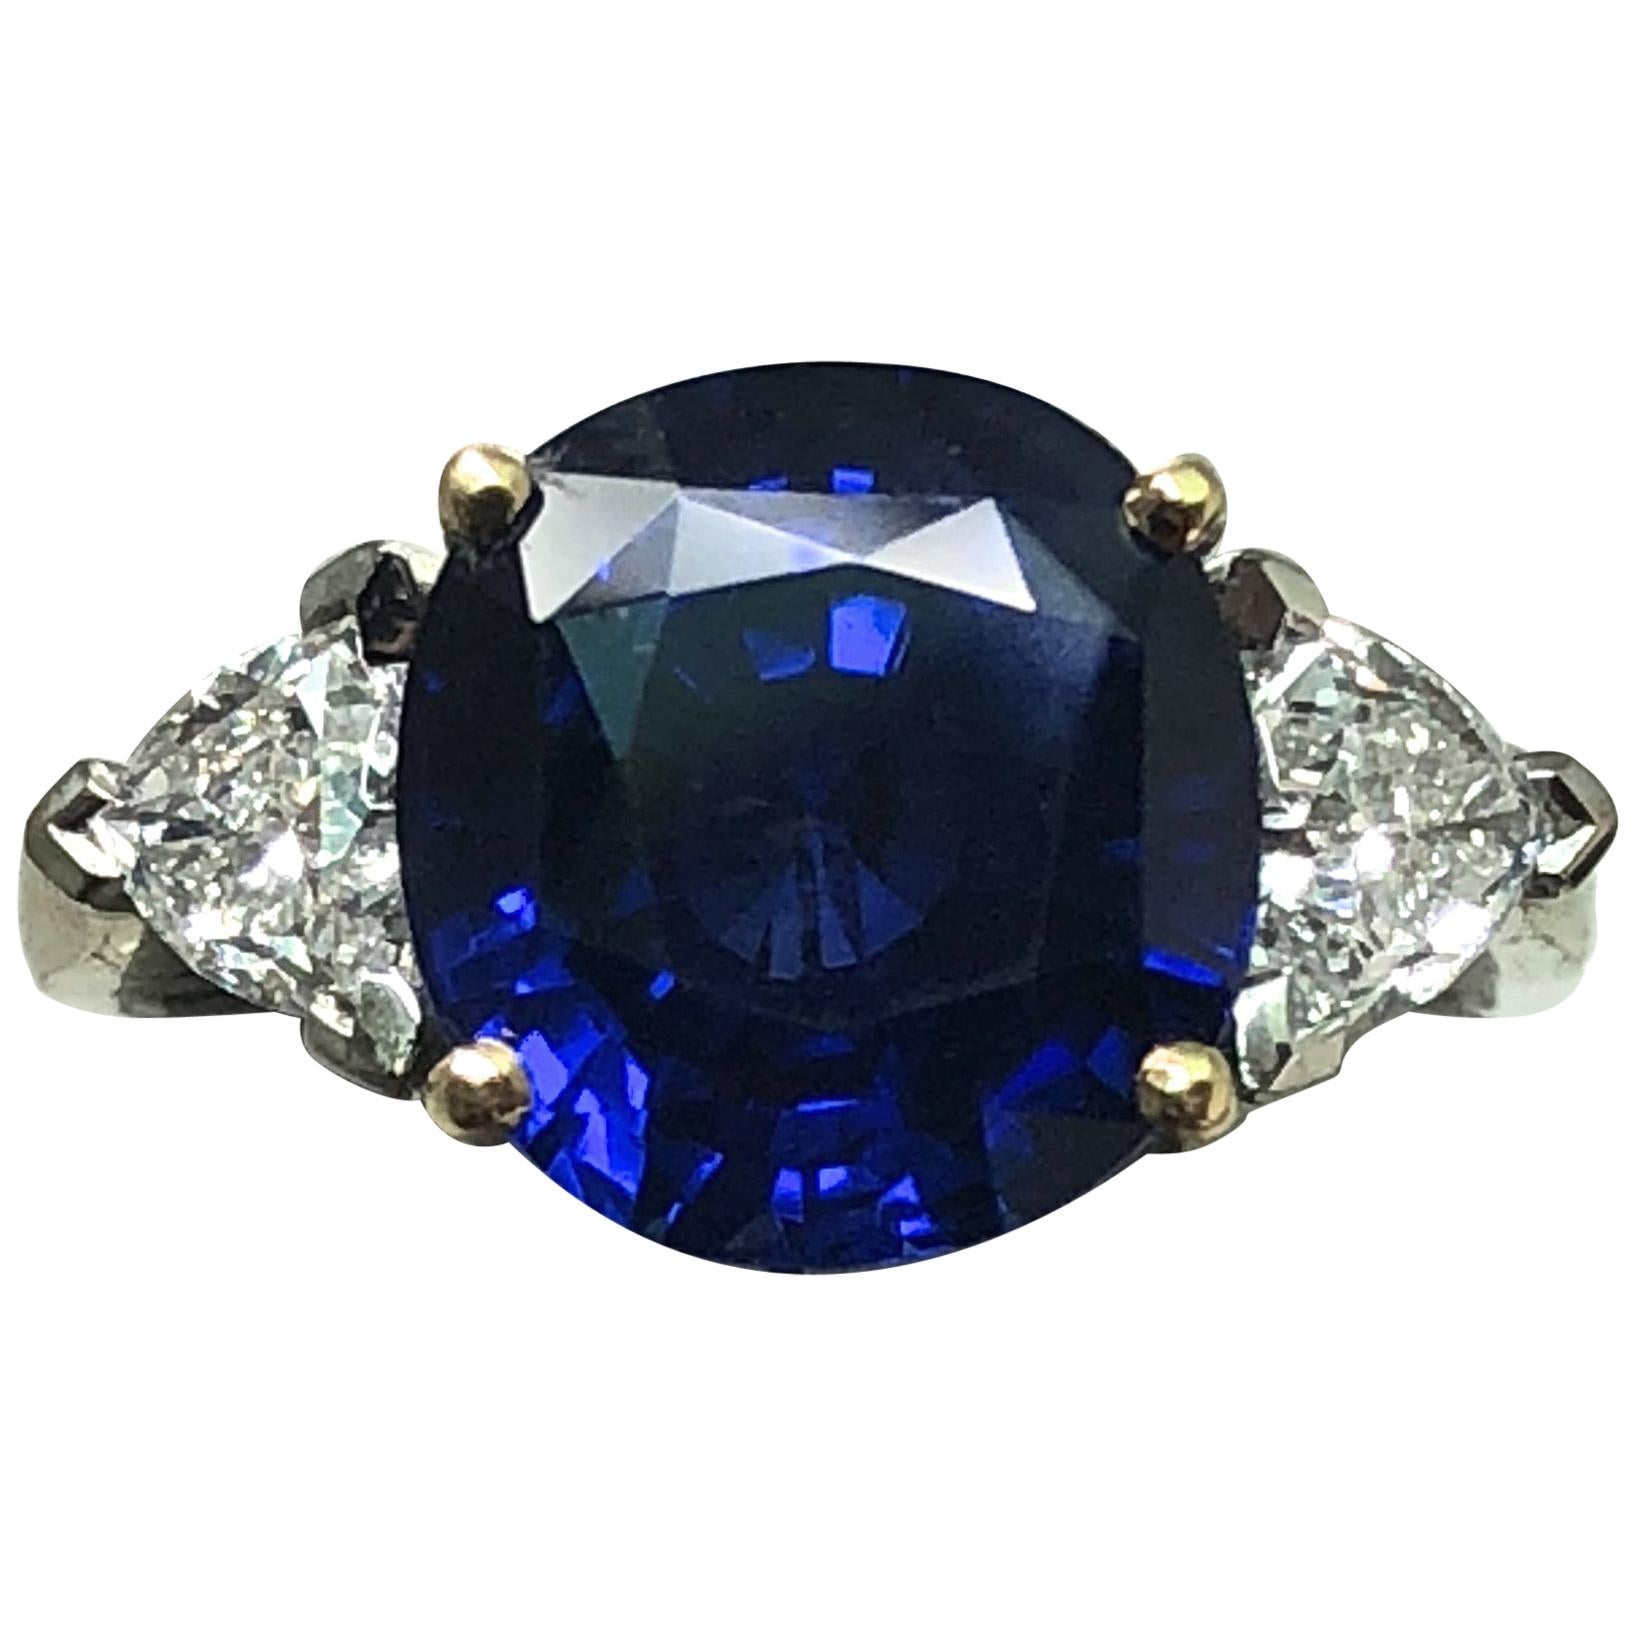 SSEF Certified 4.82 Carat Burma Sapphire and Diamond Ring